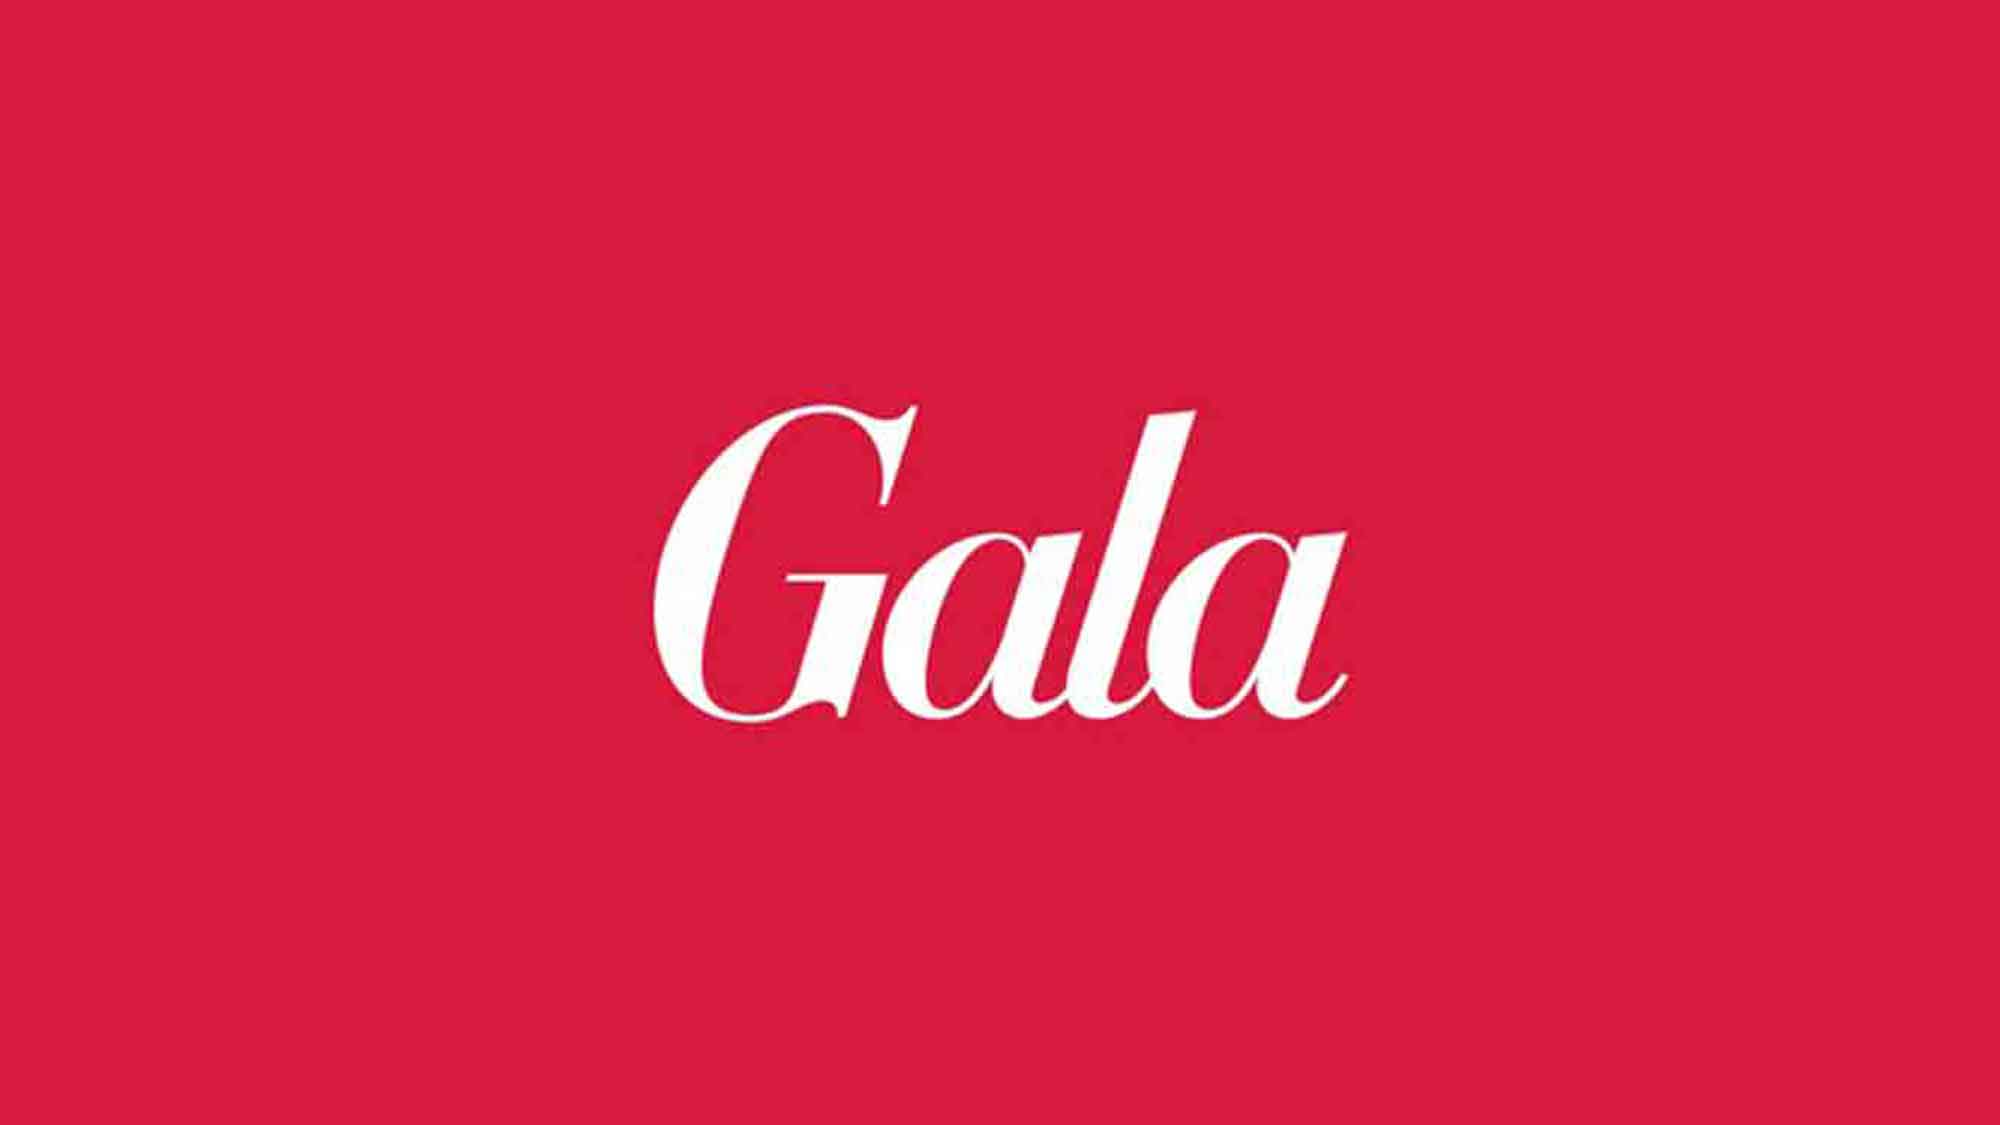 Gala: Judith Rakers über ihre Pläne